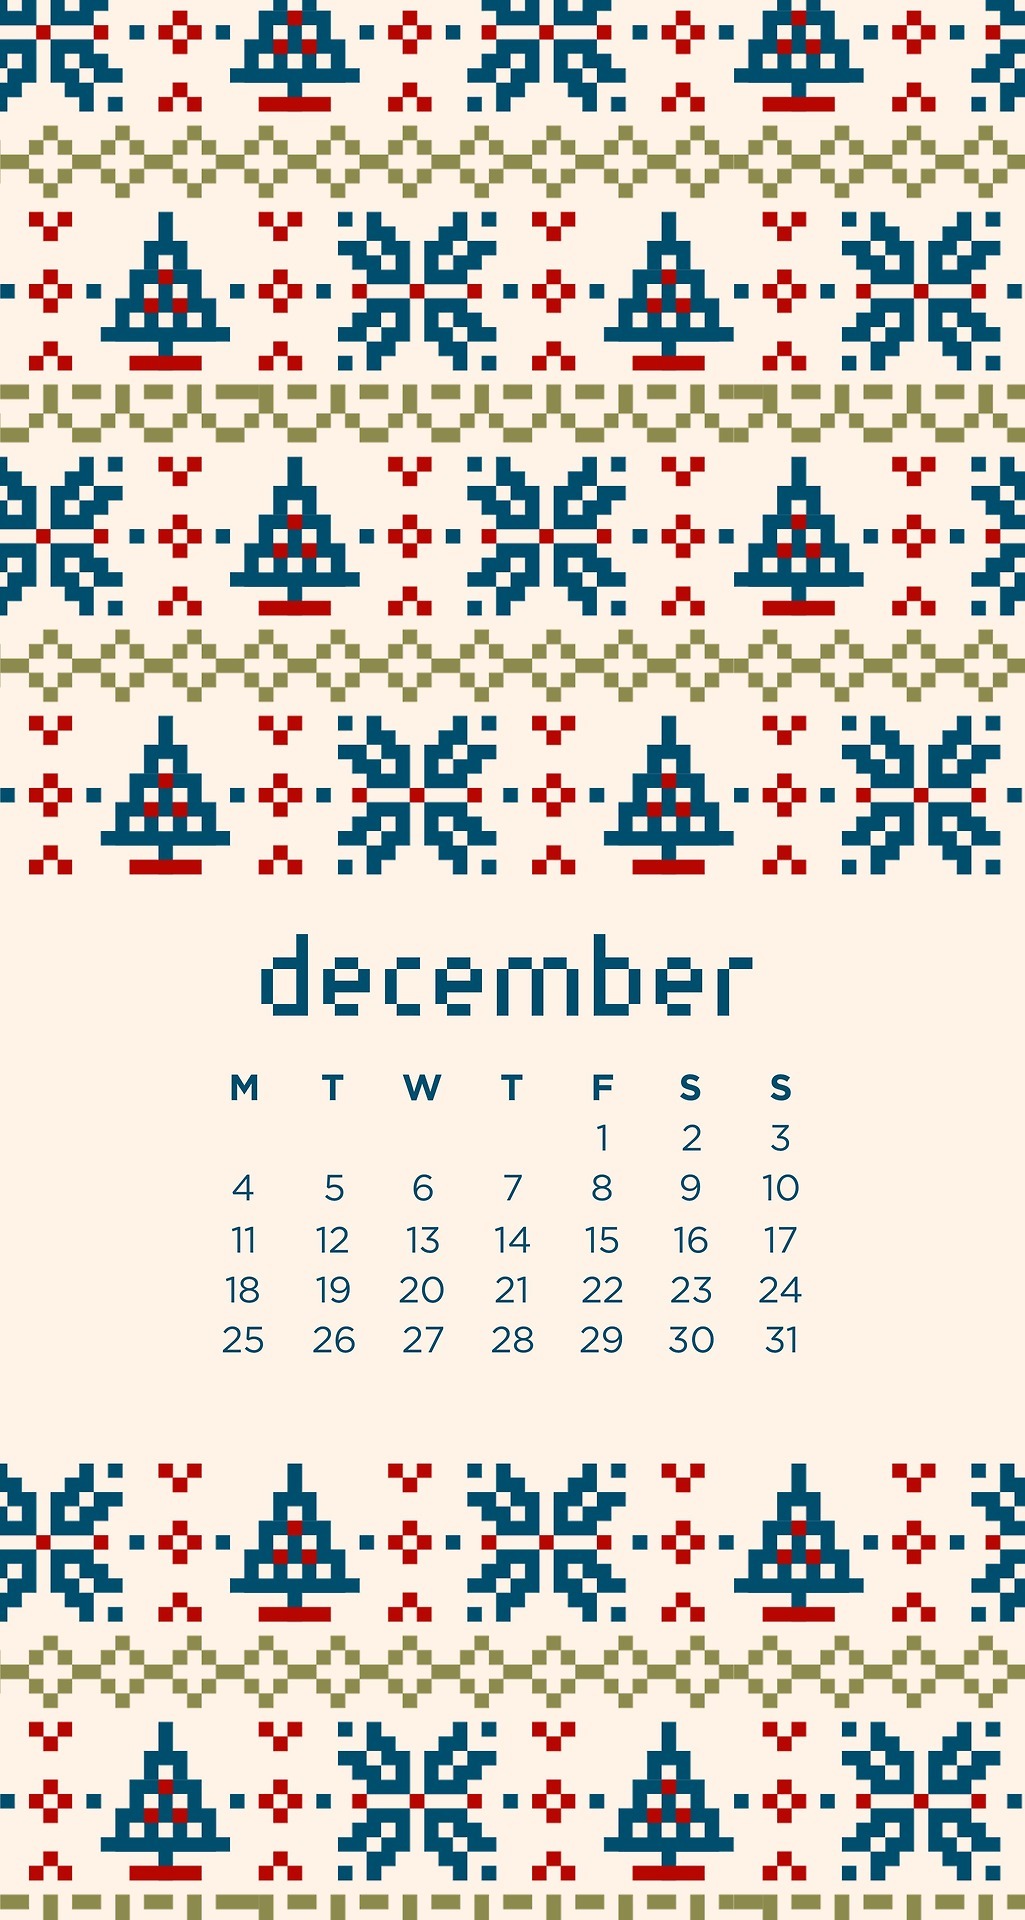 Emma S Studyblr December Christmas Knitted Pattern Phone